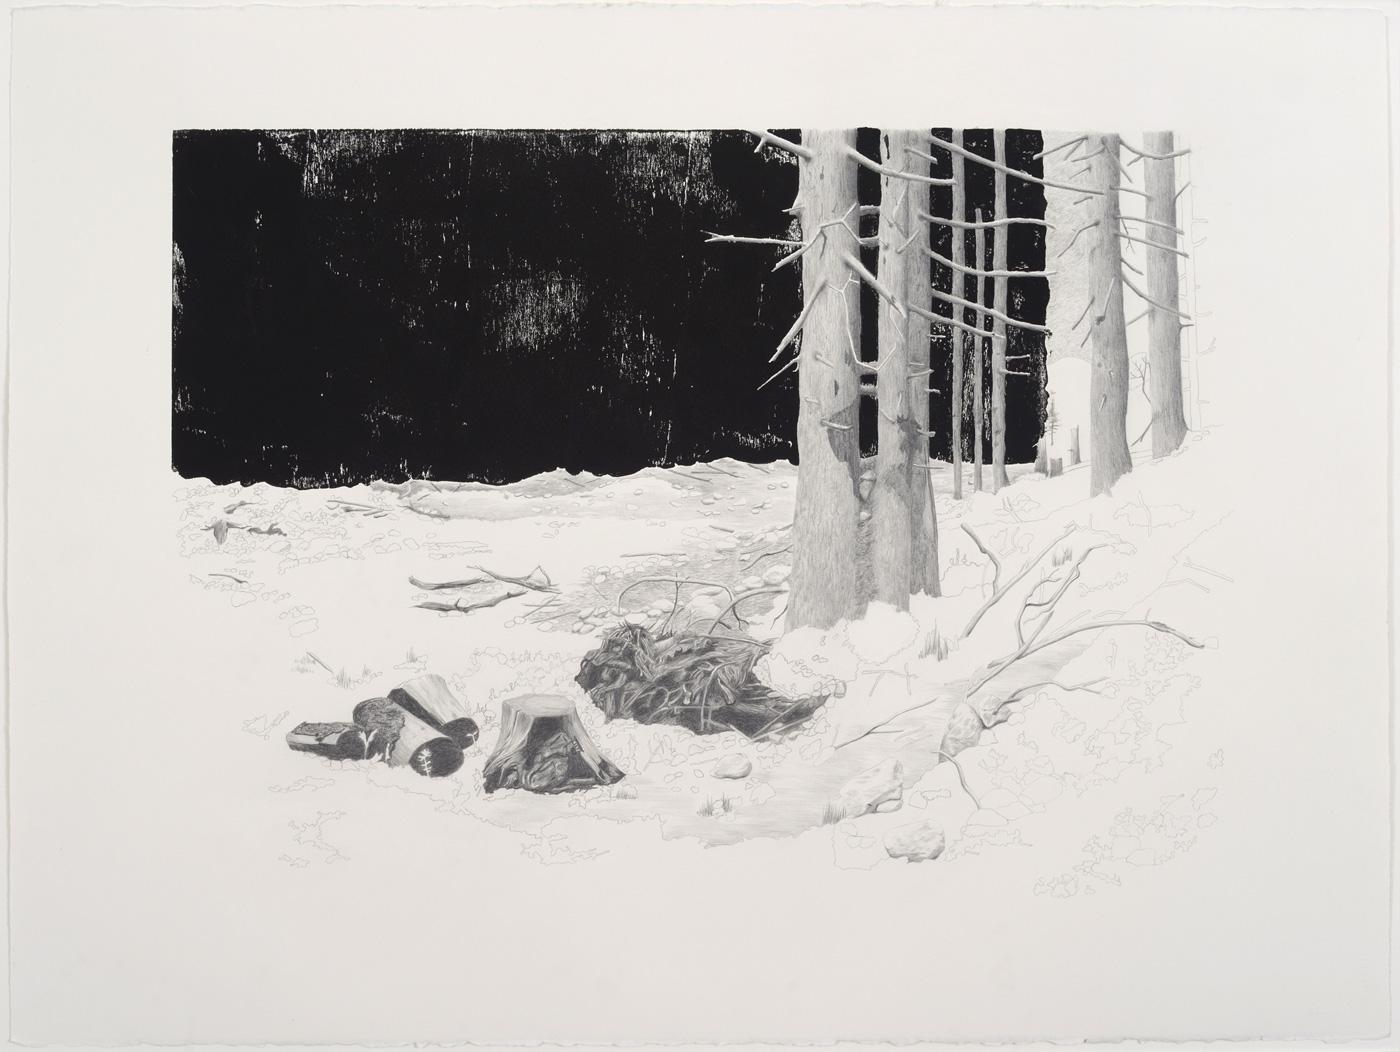 Christiane Gerda Schmidt Landscape Art - C G Schmidt, Schneise 1, woodblock print with pencil drawing of forest clearing